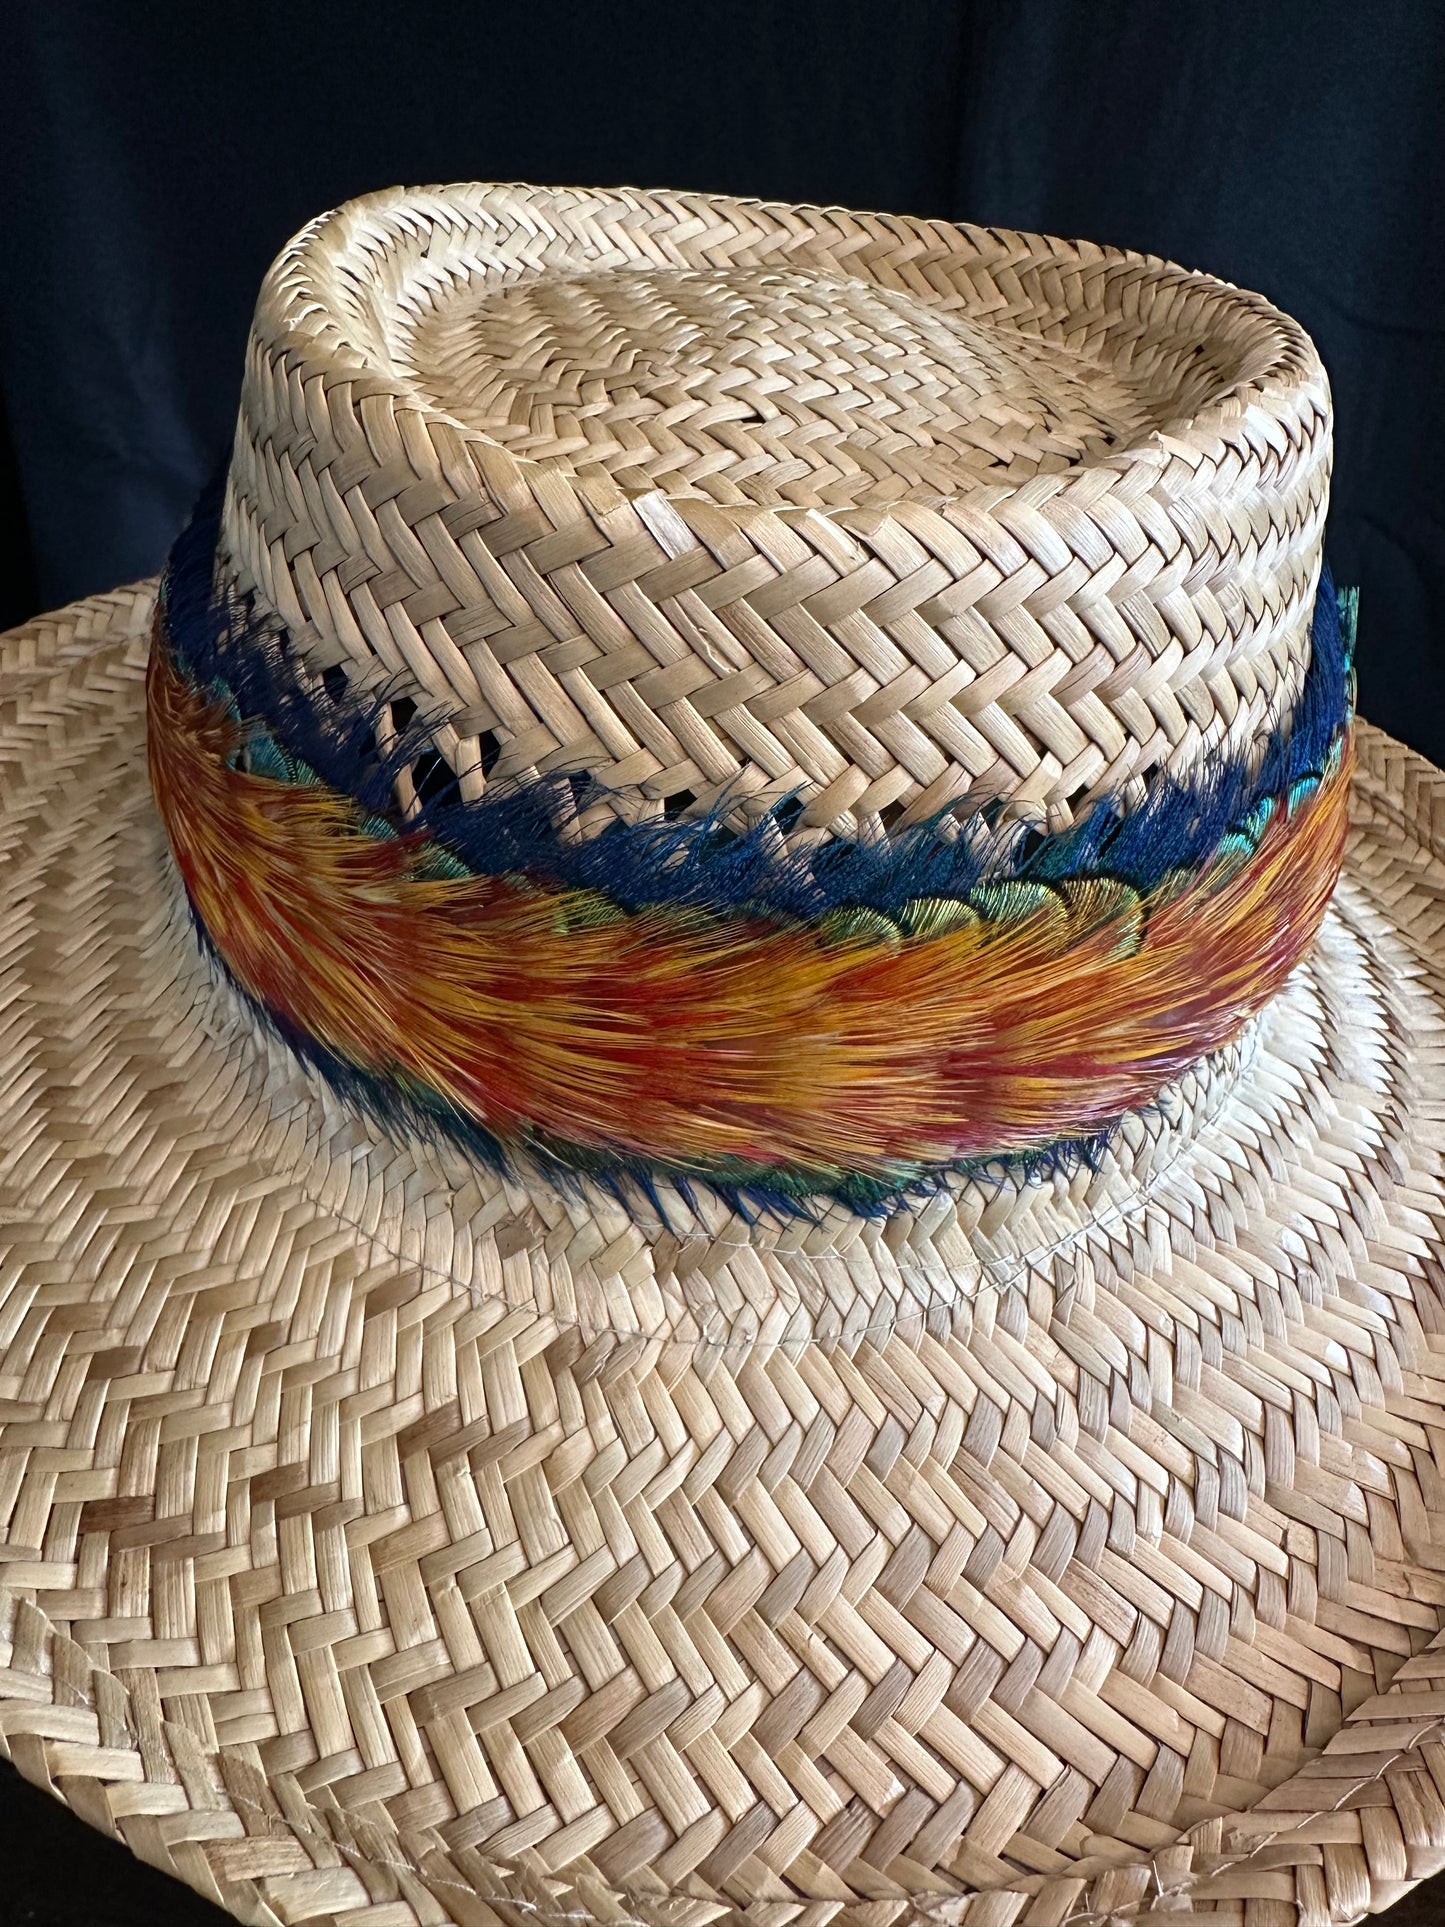 25" LEHUA - Hilo style blue/gold peacock and golden pheasant humu papa (feather hatband)